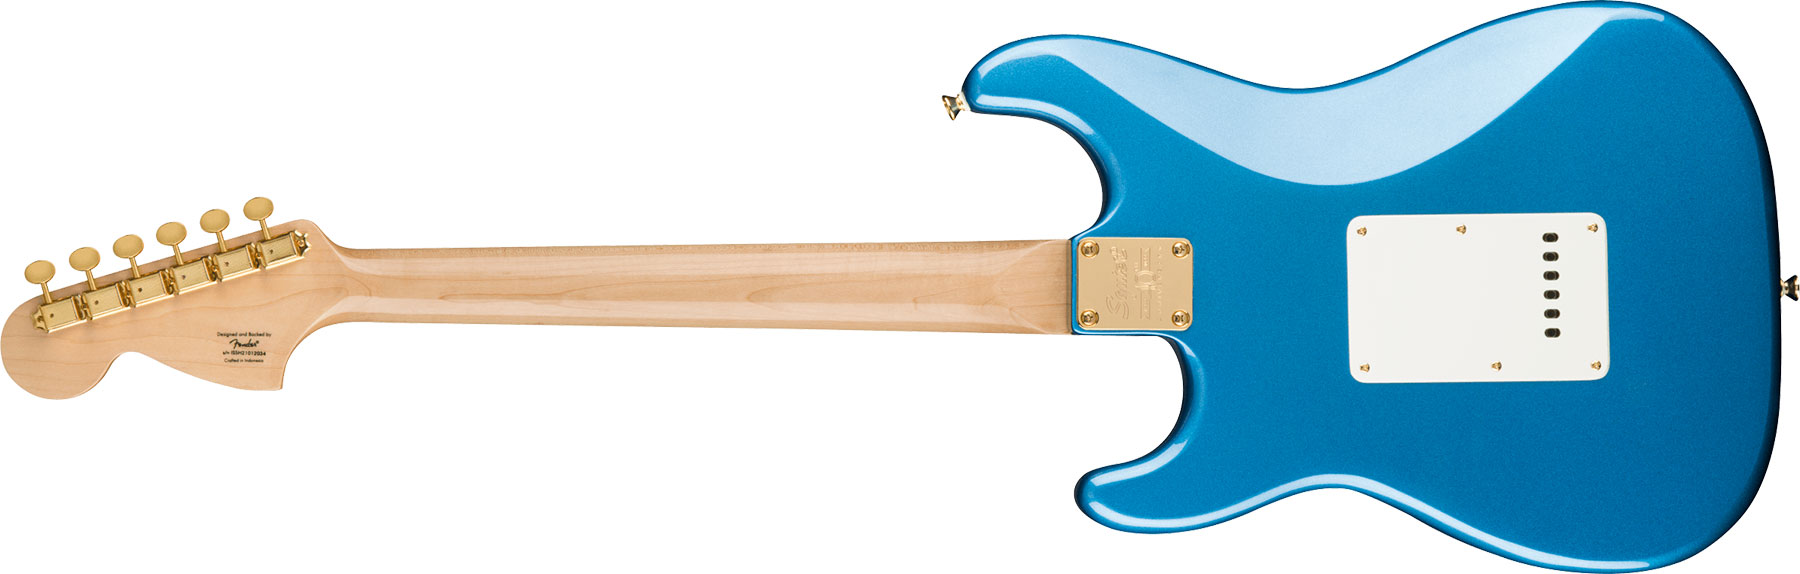 Squier Strat 40th Anniversary Gold Edition Lau - Lake Placid Blue - Str shape electric guitar - Variation 1